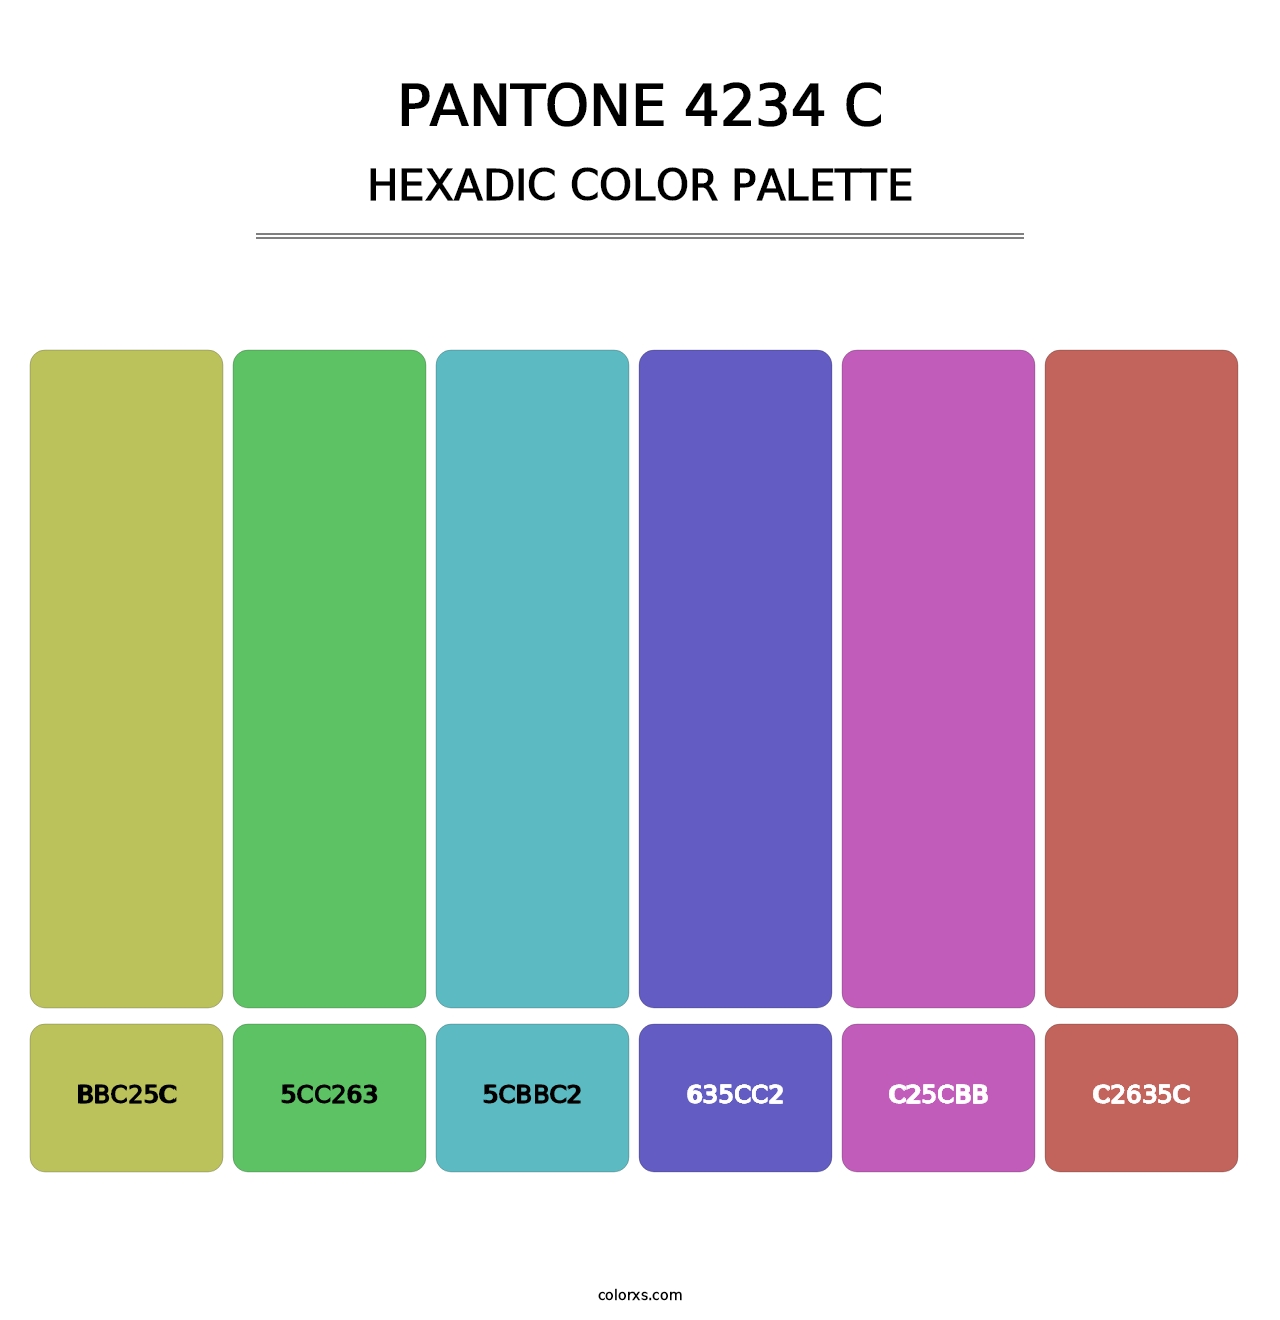 PANTONE 4234 C - Hexadic Color Palette